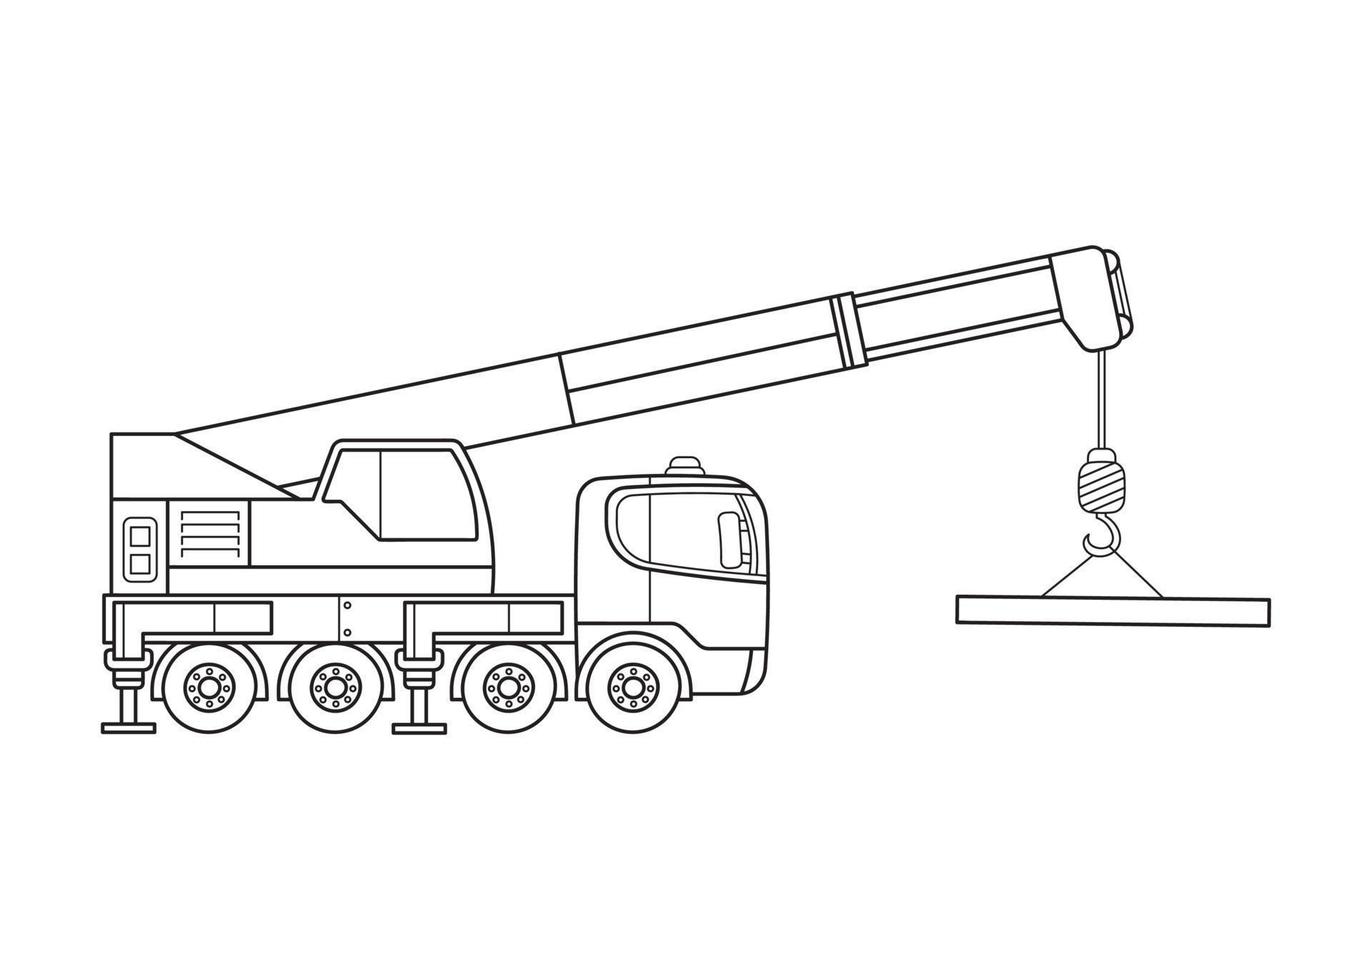 Single continuous line drawing of crane truck  Stock Illustration  69501537  PIXTA